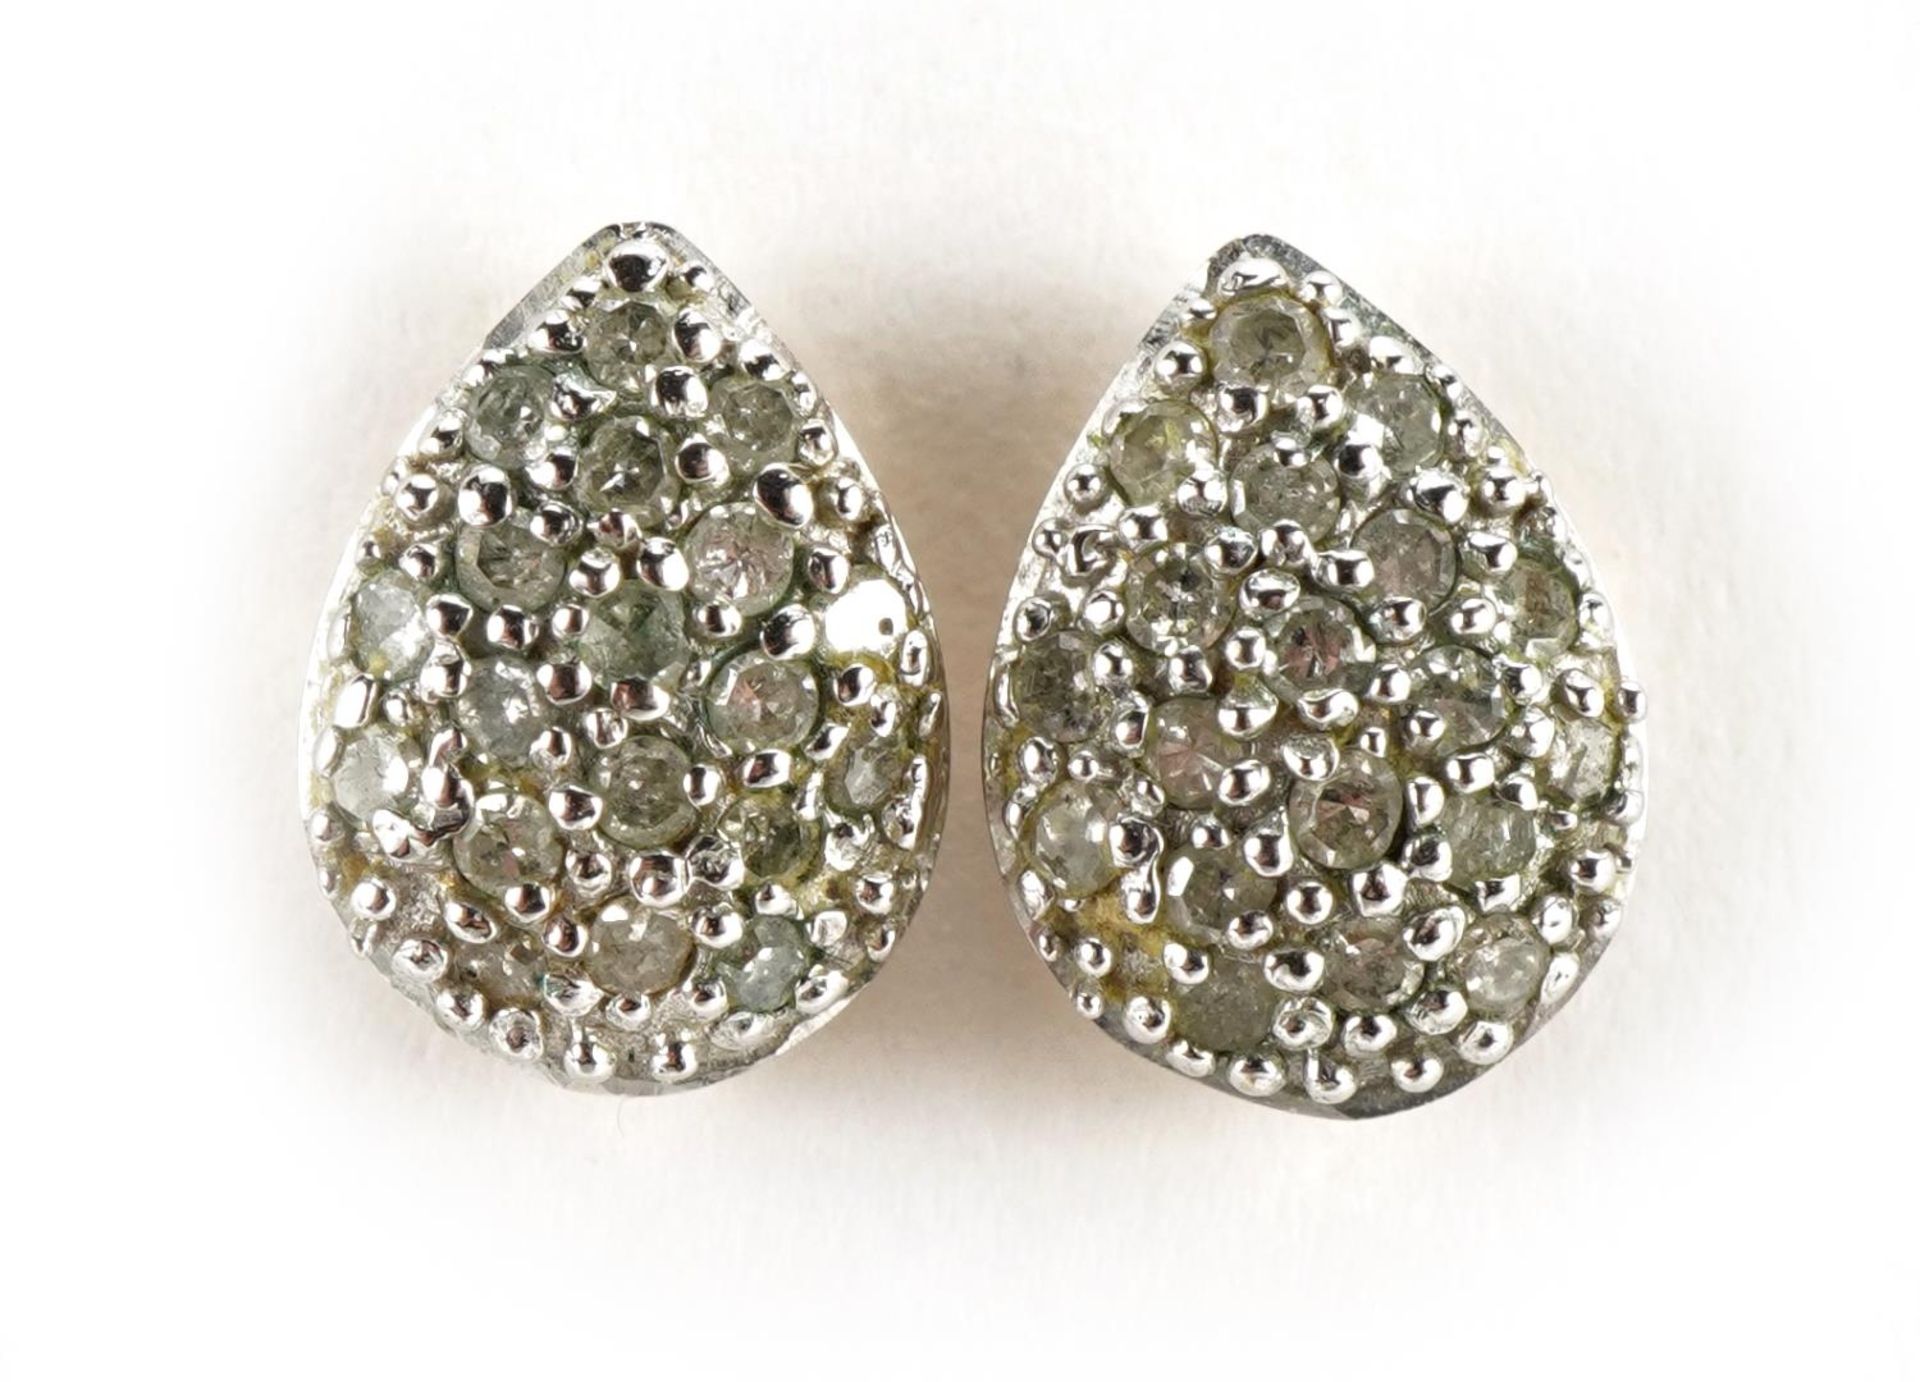 Pair of 9ct gold diamond cluster stud earrings, 9mm high, 1.3g